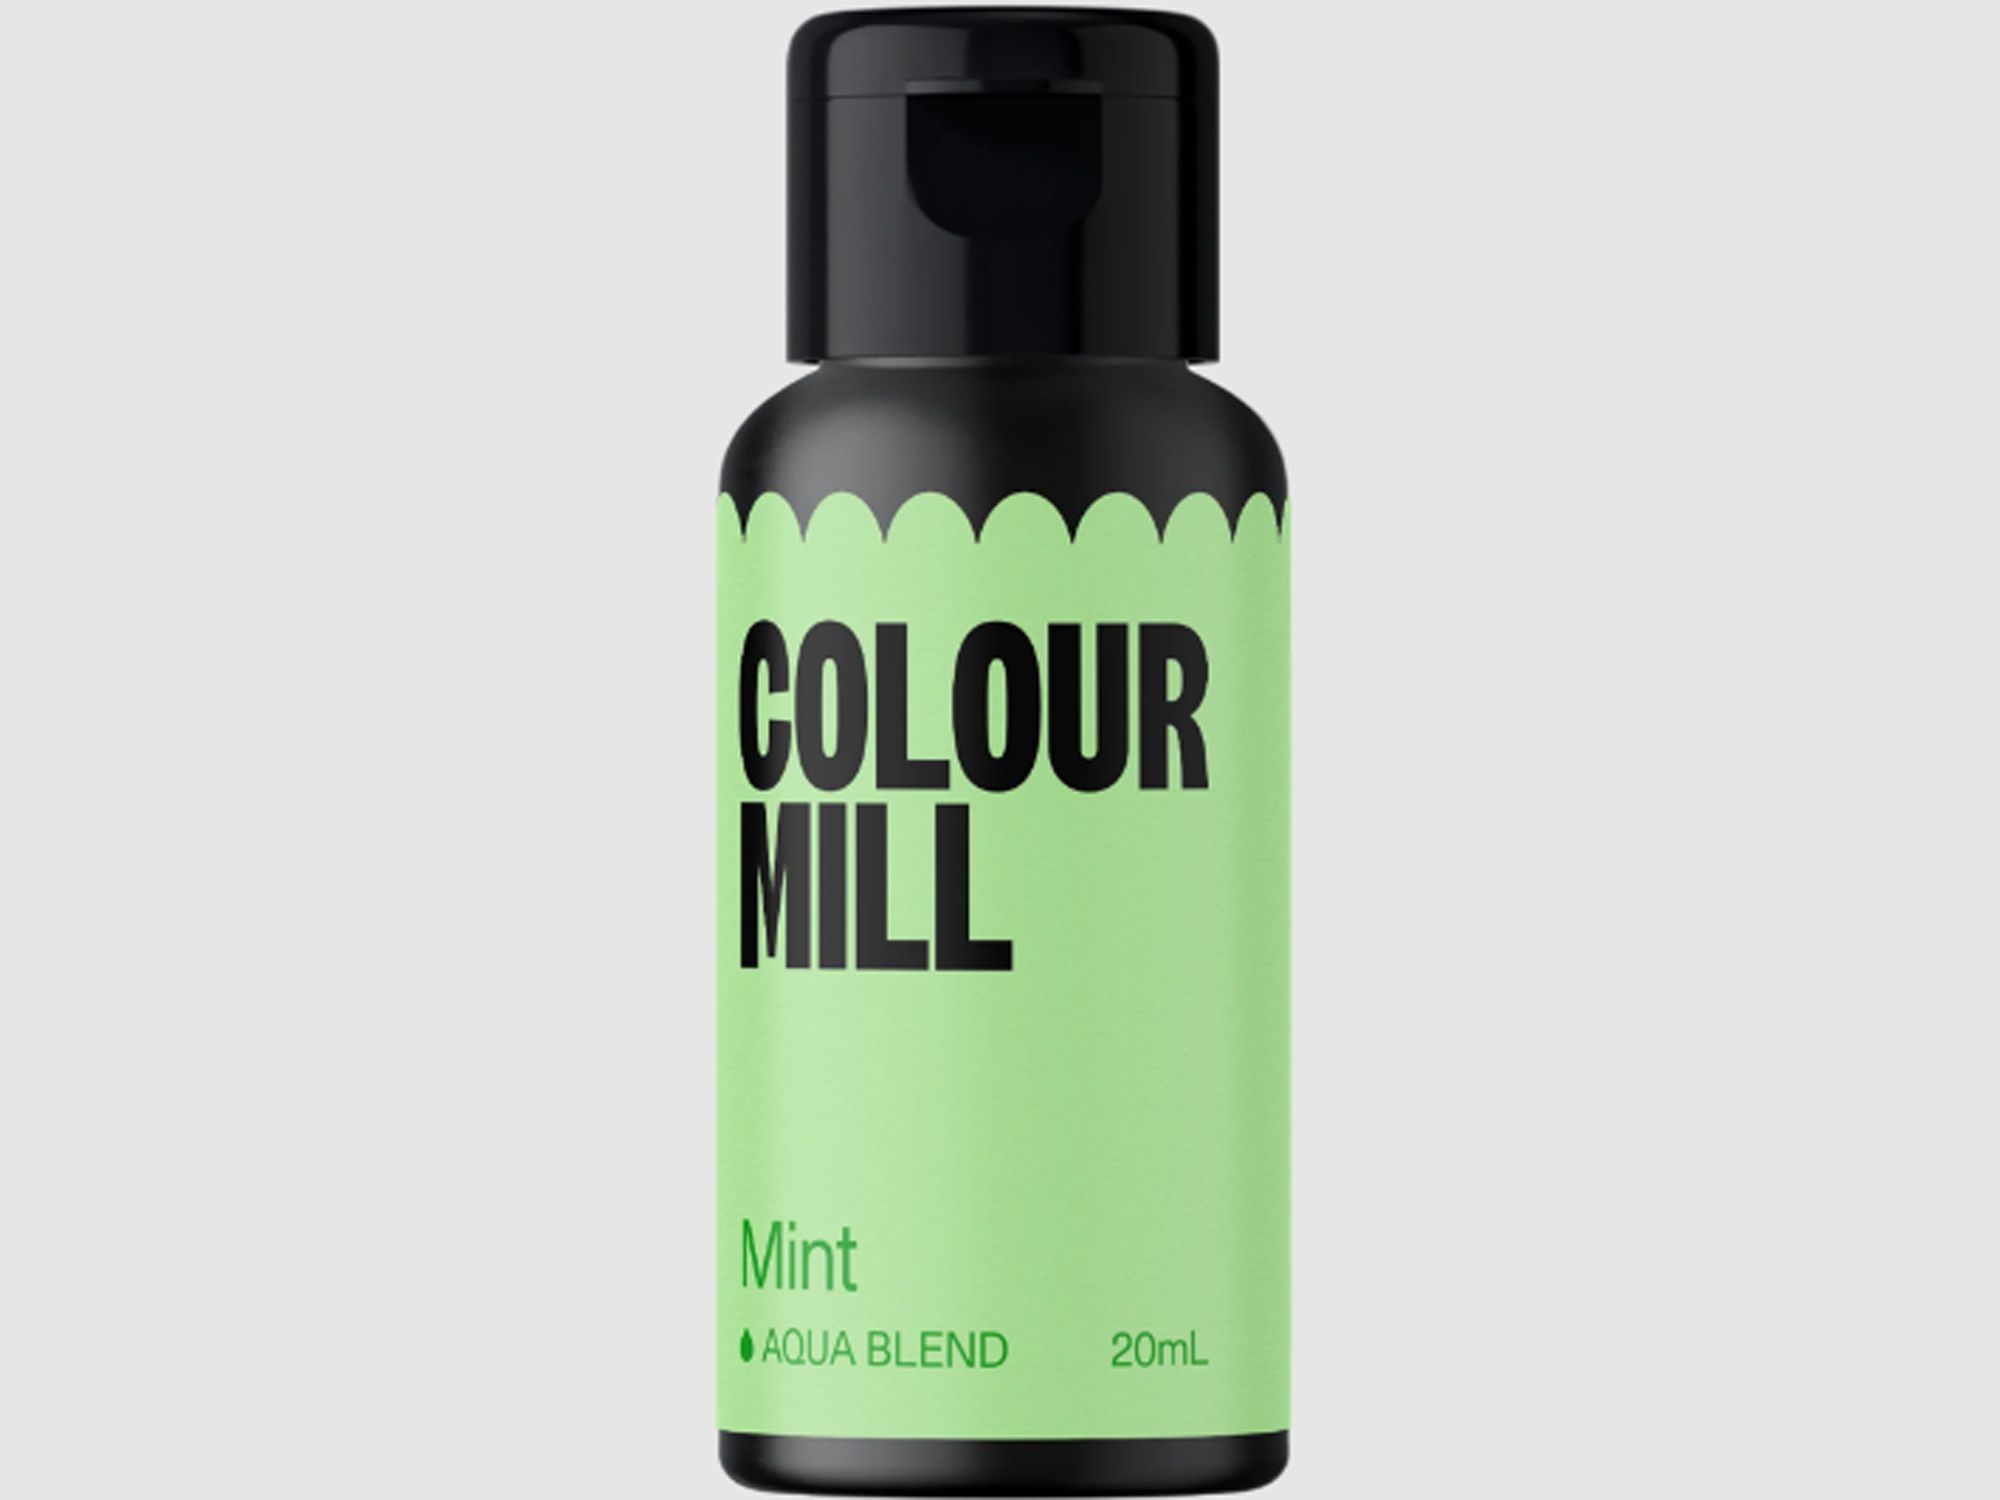 Colour Mill Mint (Aqua Blend) 20ml